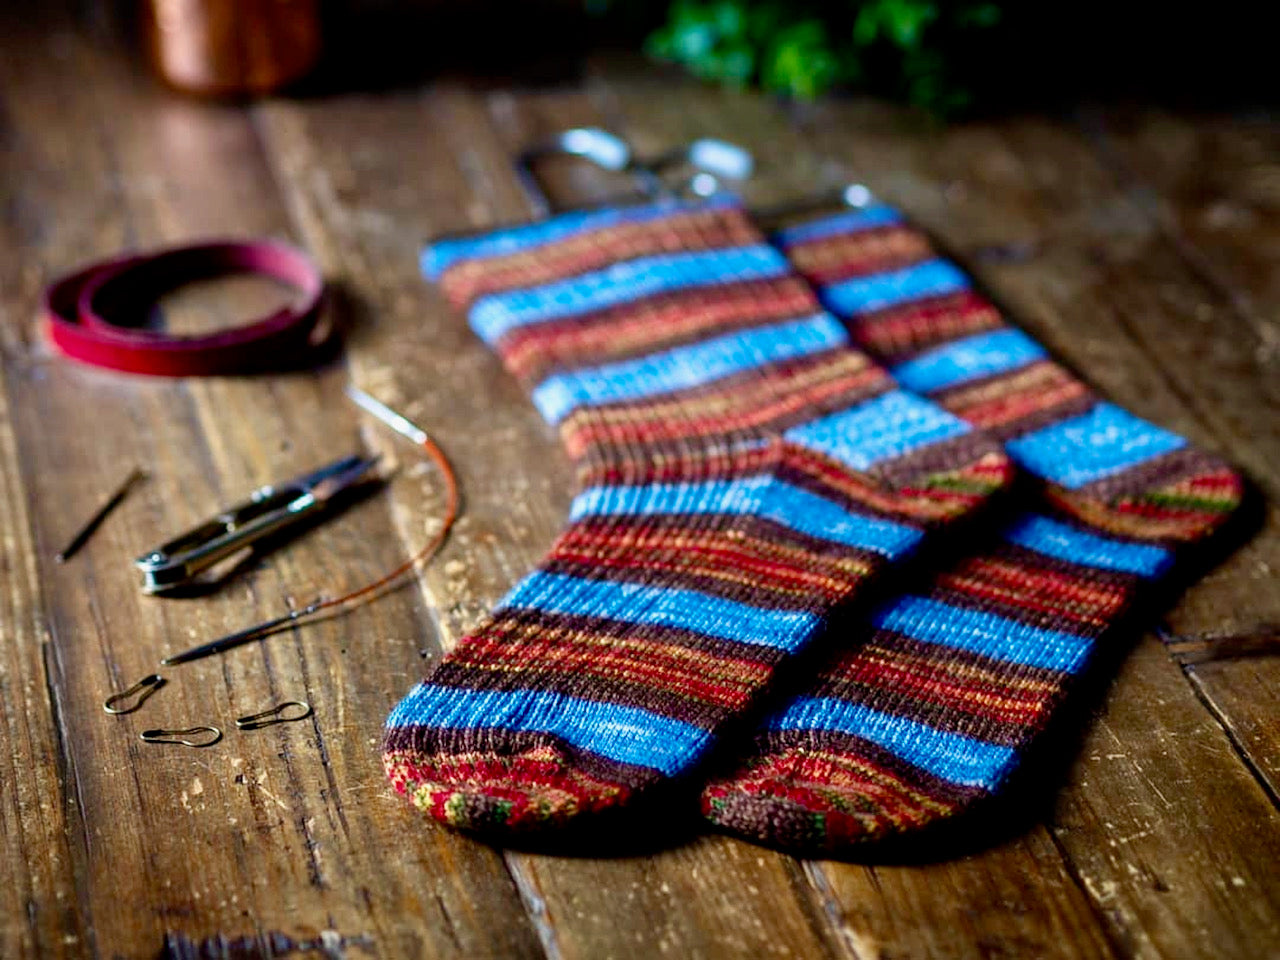 Gatineau fall self-striping sock yarn